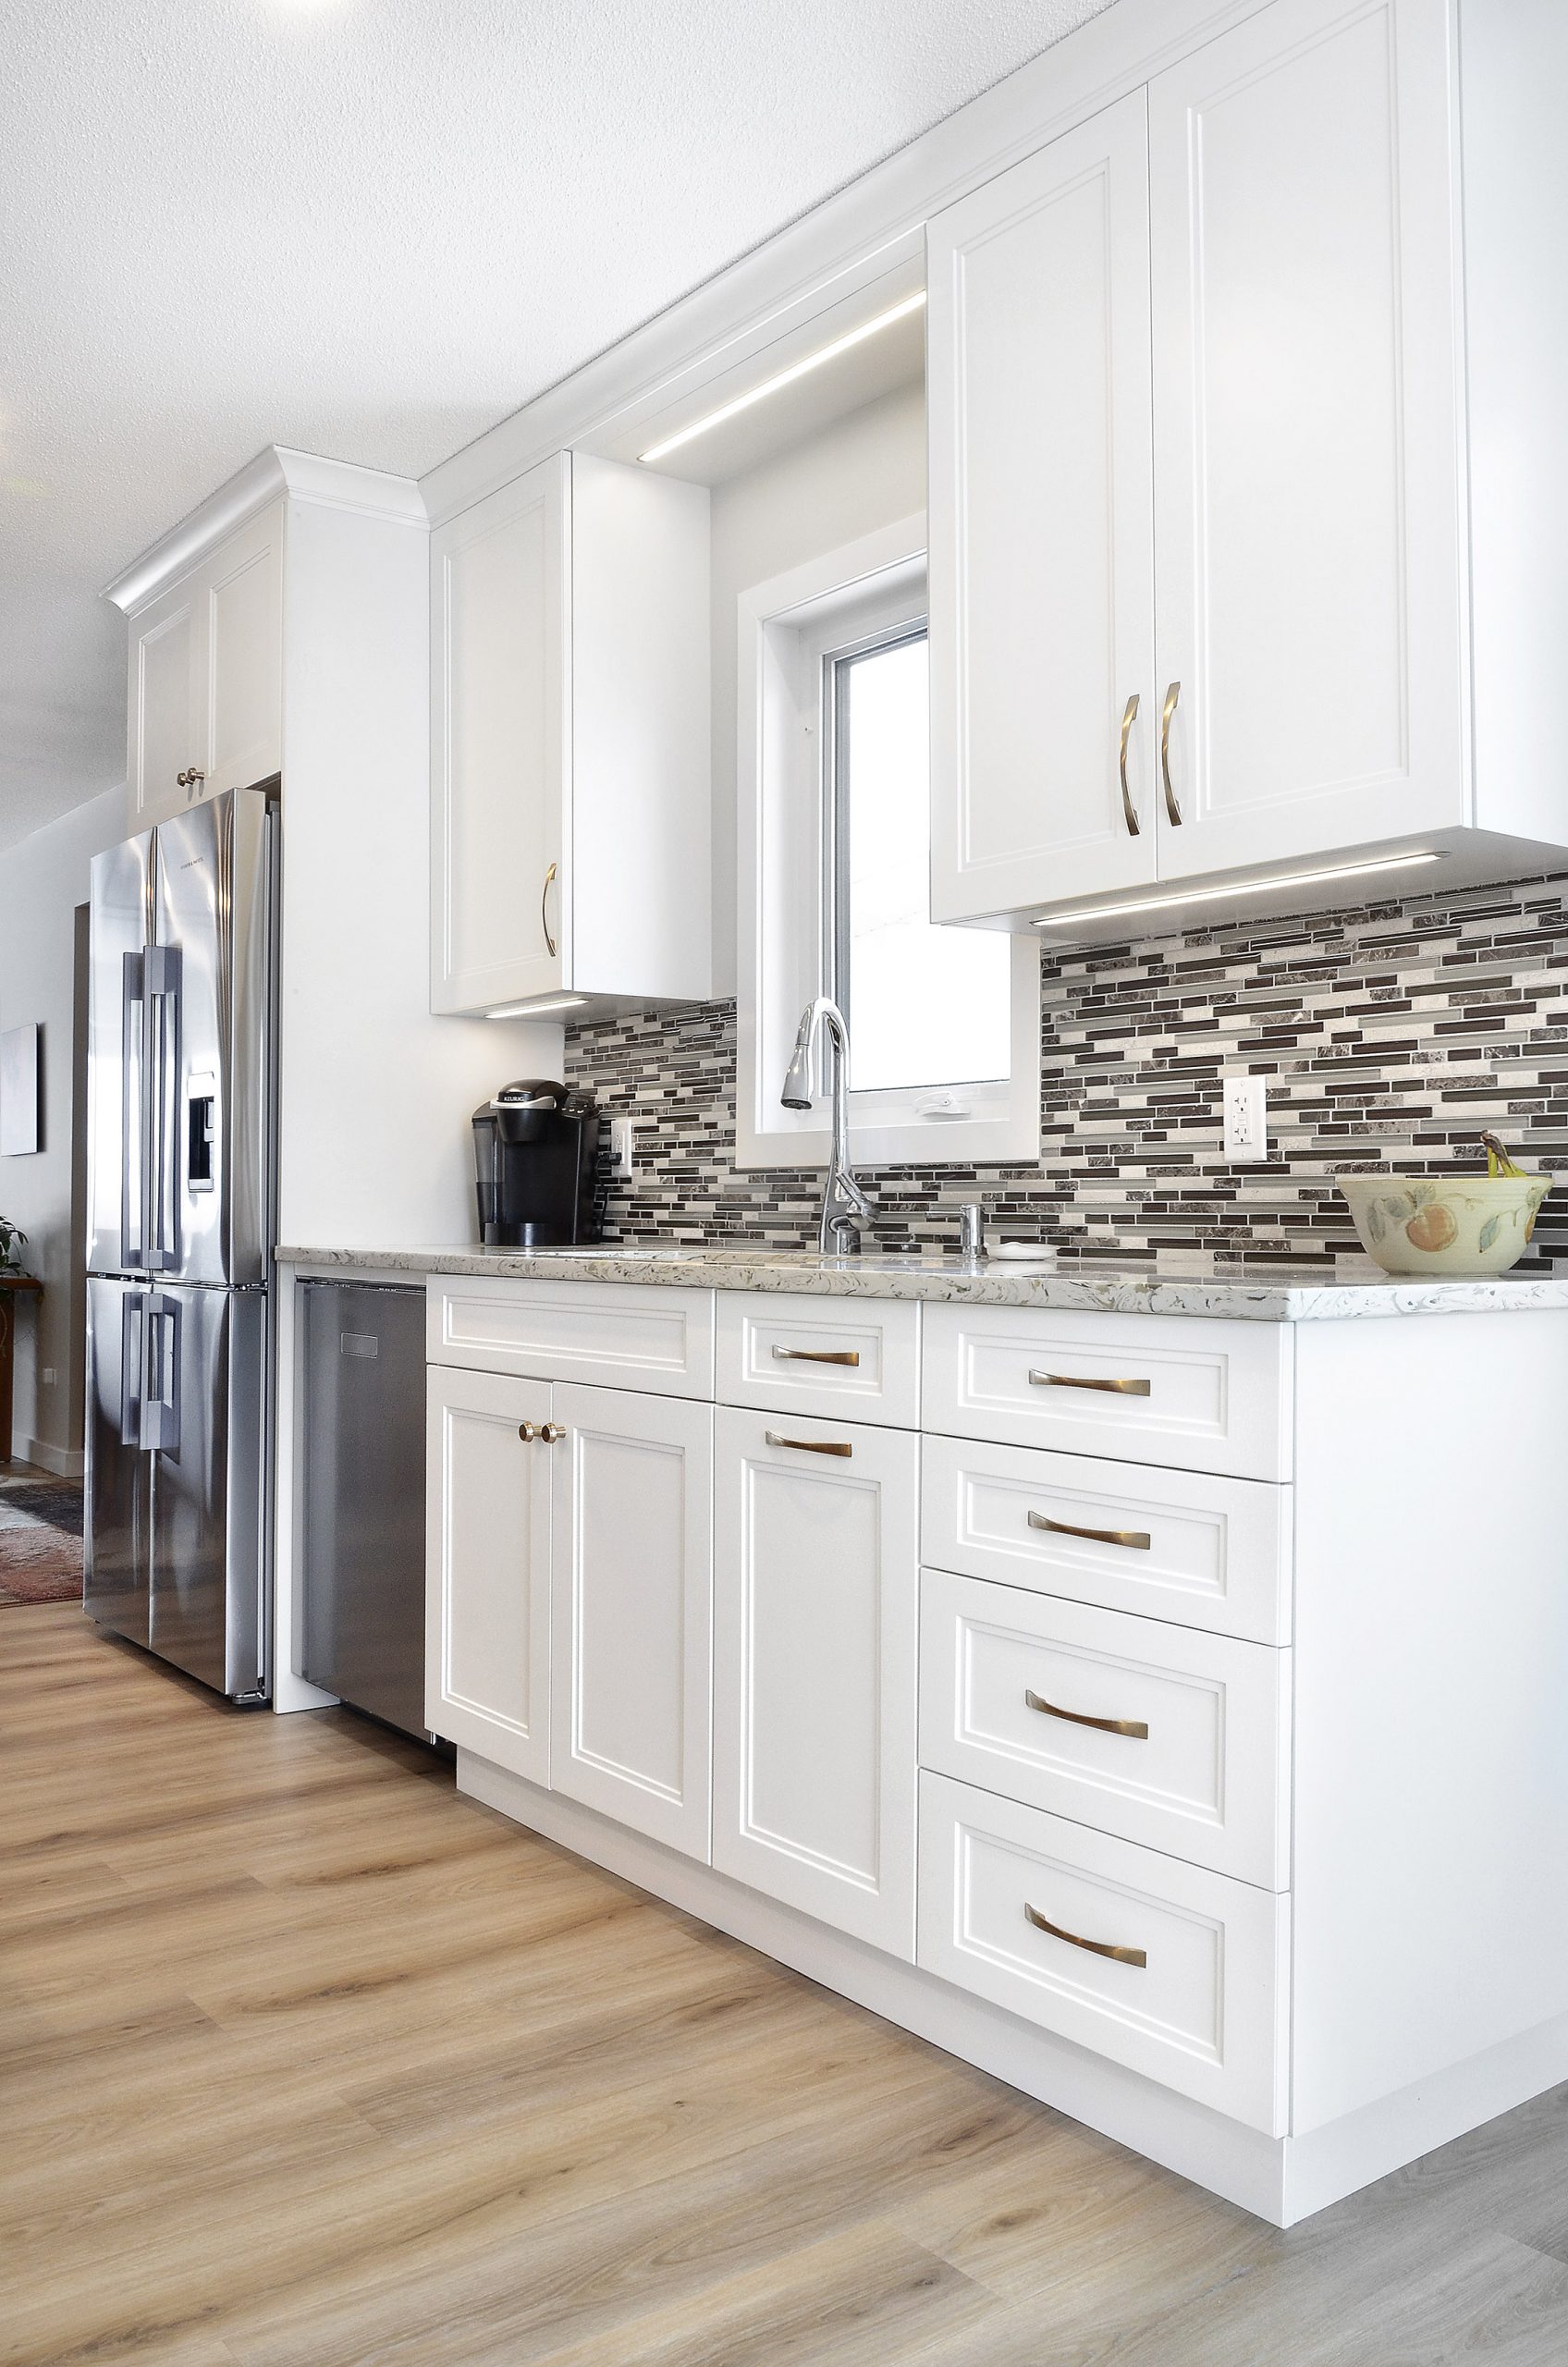 Winnipeg renovations modern kitchen sleek white cabinets white marble countertop thin tile backsplash